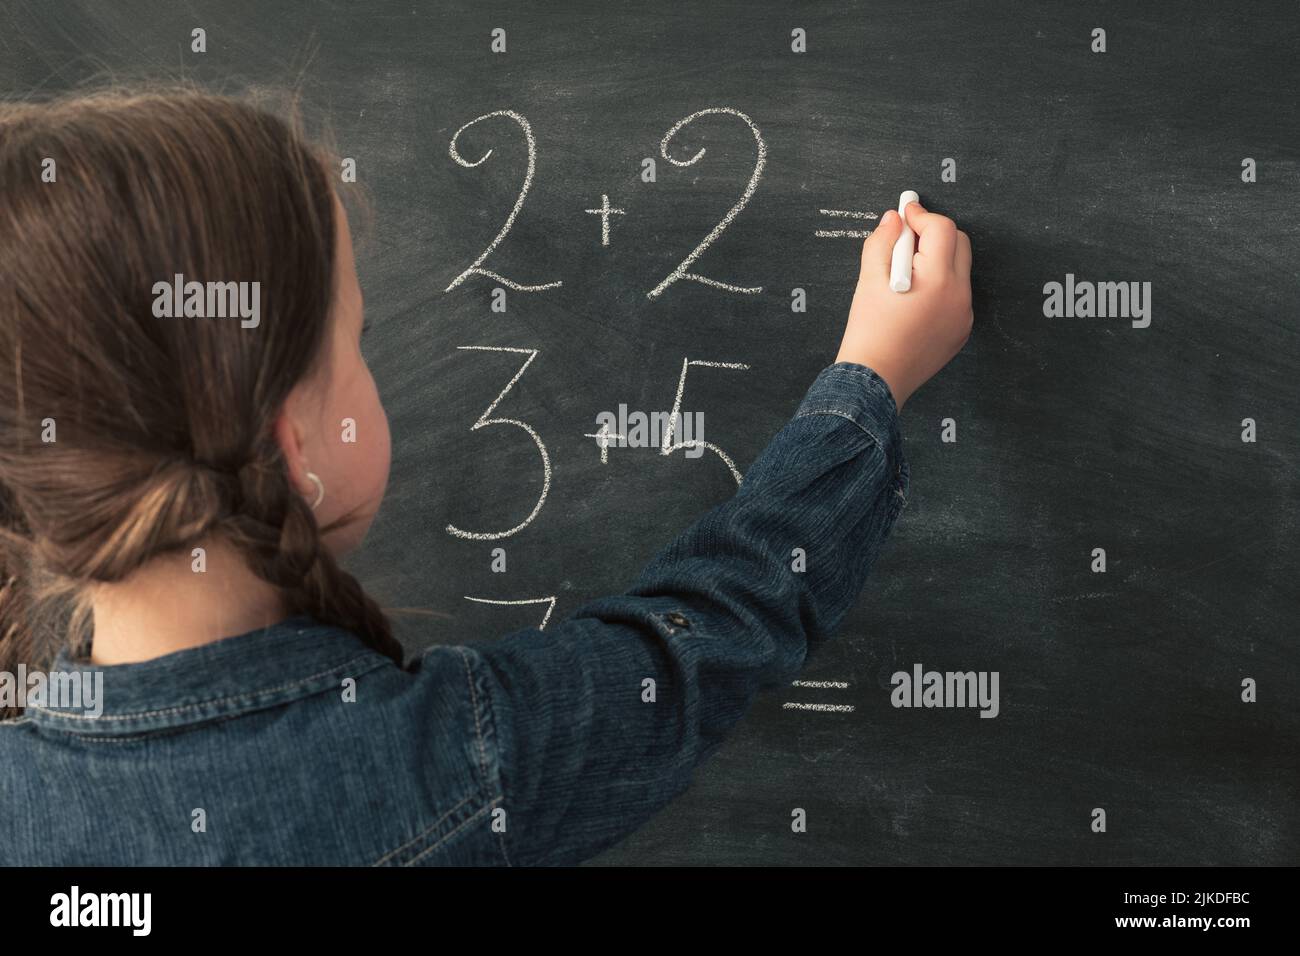 Writes Chalkboard Chalk Math Problem Girl Chalkboard Stock Photo by  ©info.fotodrobik.pl 378771028